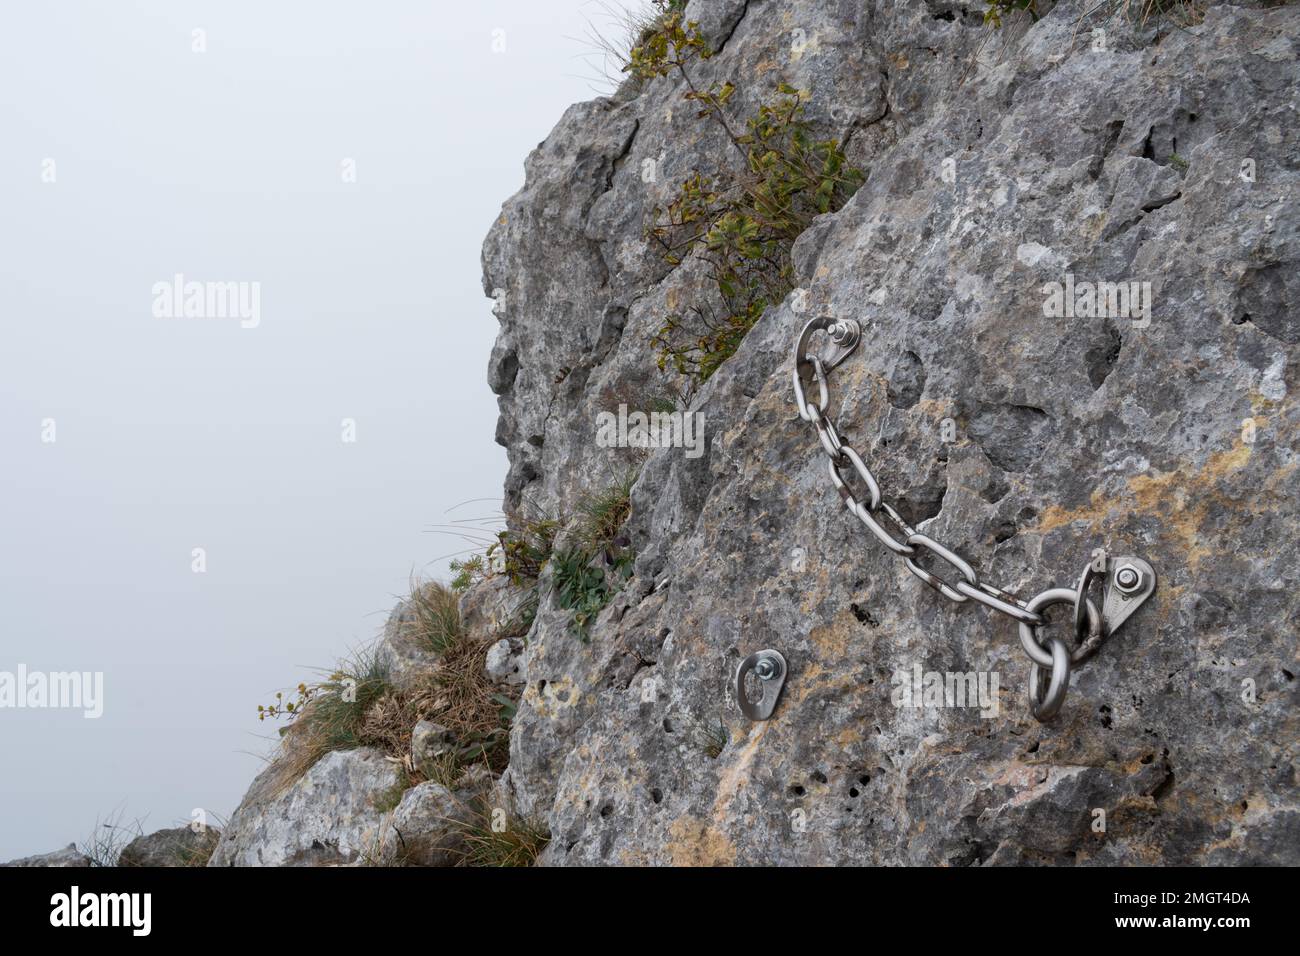 Chain ring anchor for mountain climbing, mountaineer equipment Stock Photo